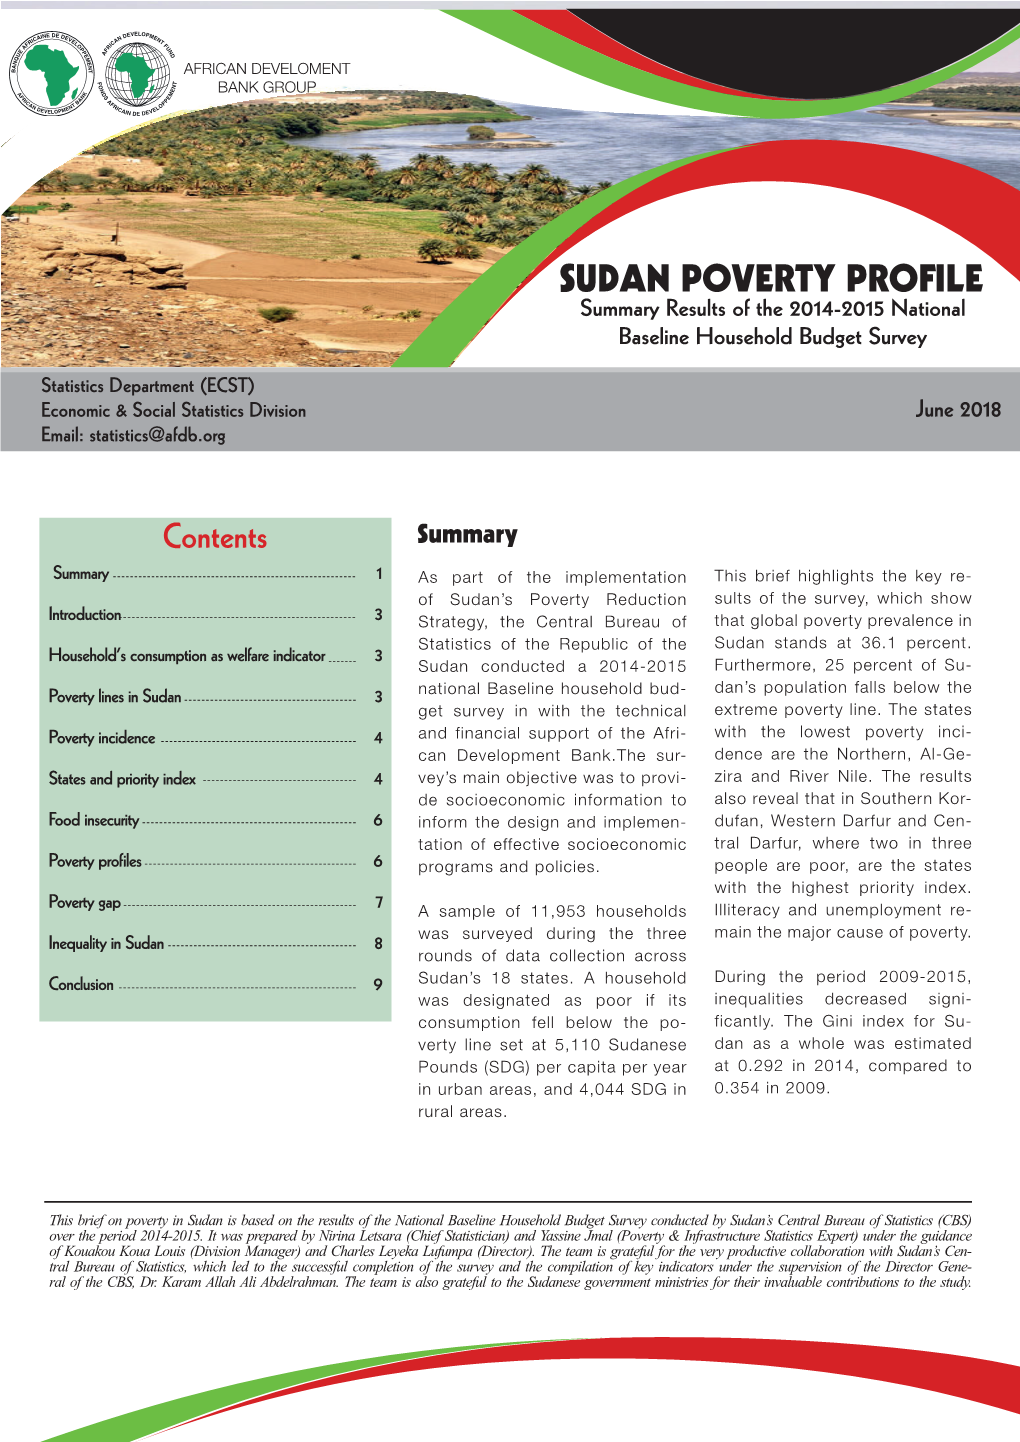 Afdb SUDAN POVERTY PROFILE